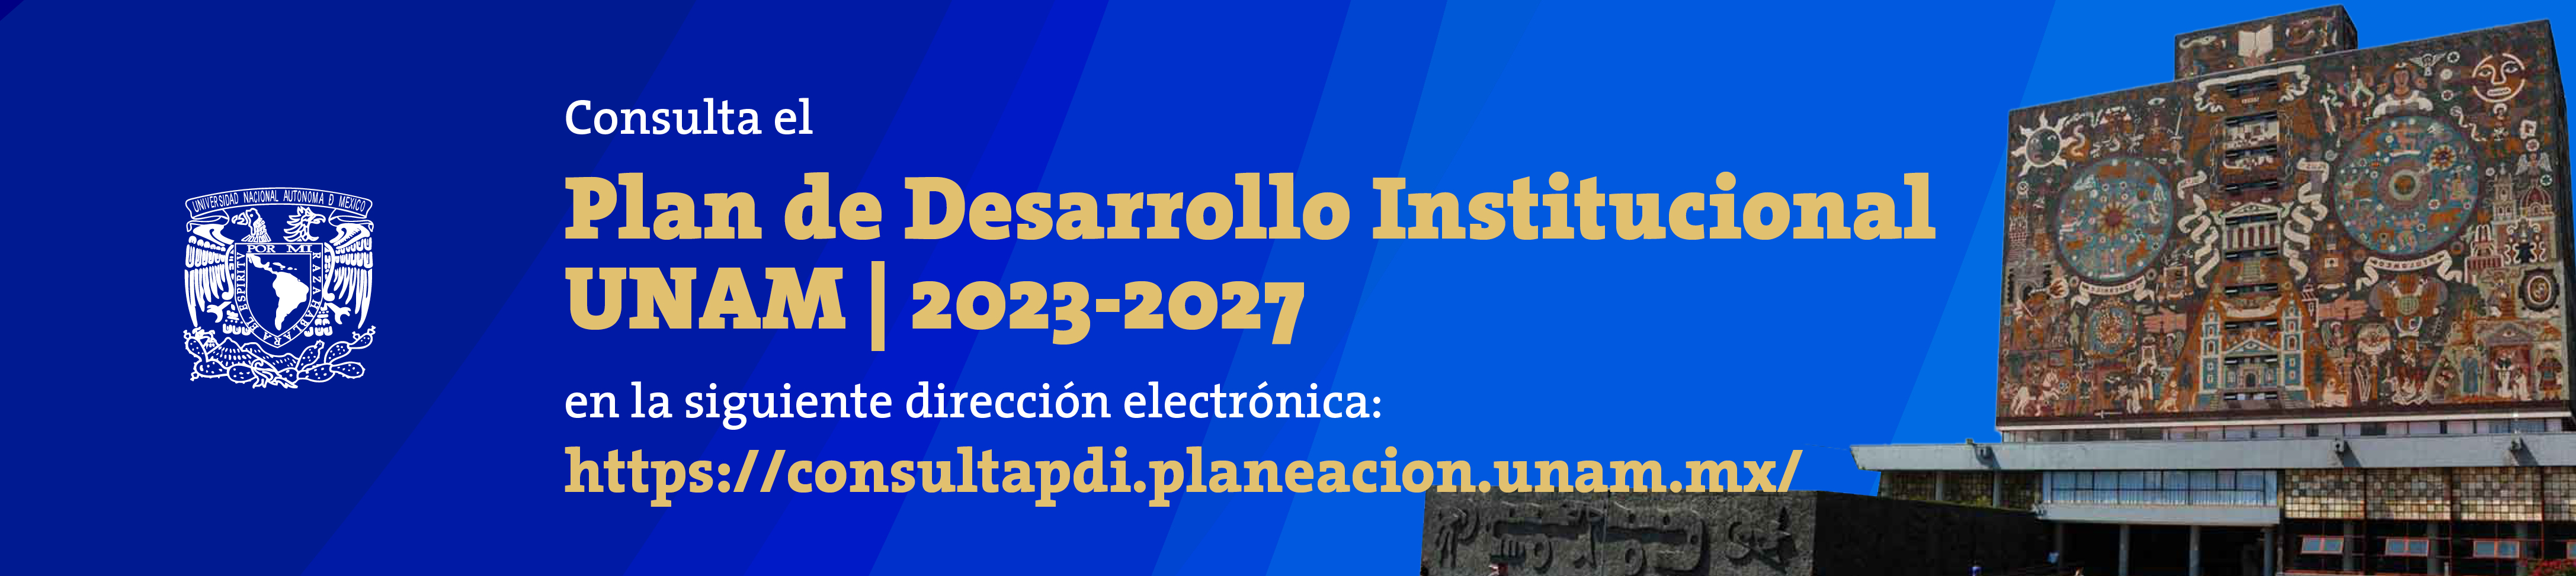 Consulta Plan de Desarrollo Institucional UNAM 2023-2027